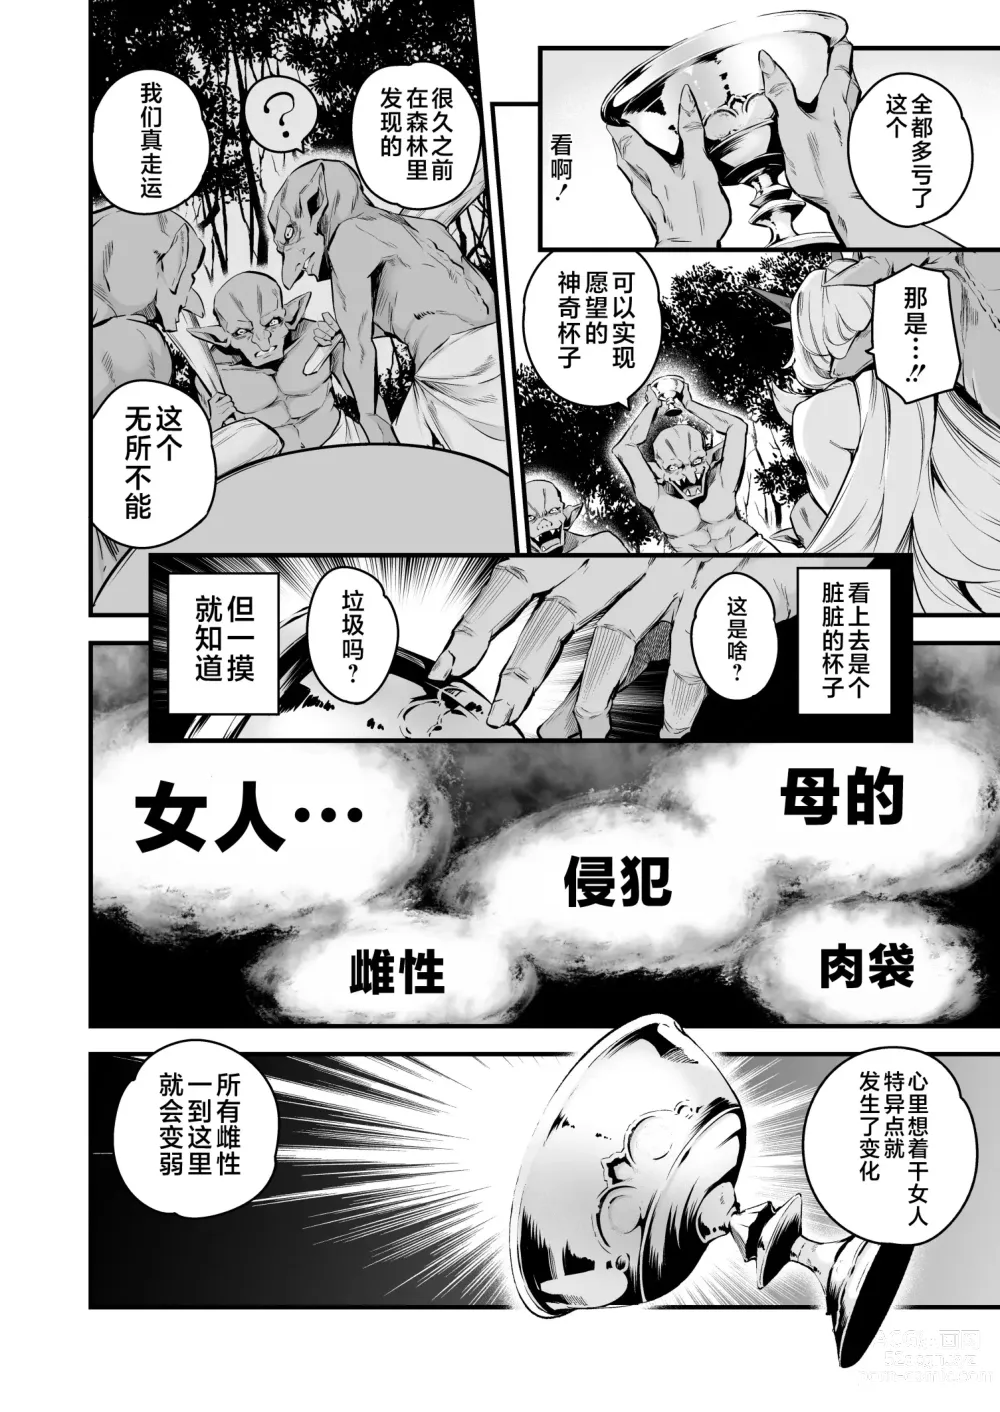 Page 9 of doujinshi Lv1 ni Naru Tokuiten - Singularity that becomes Lv1